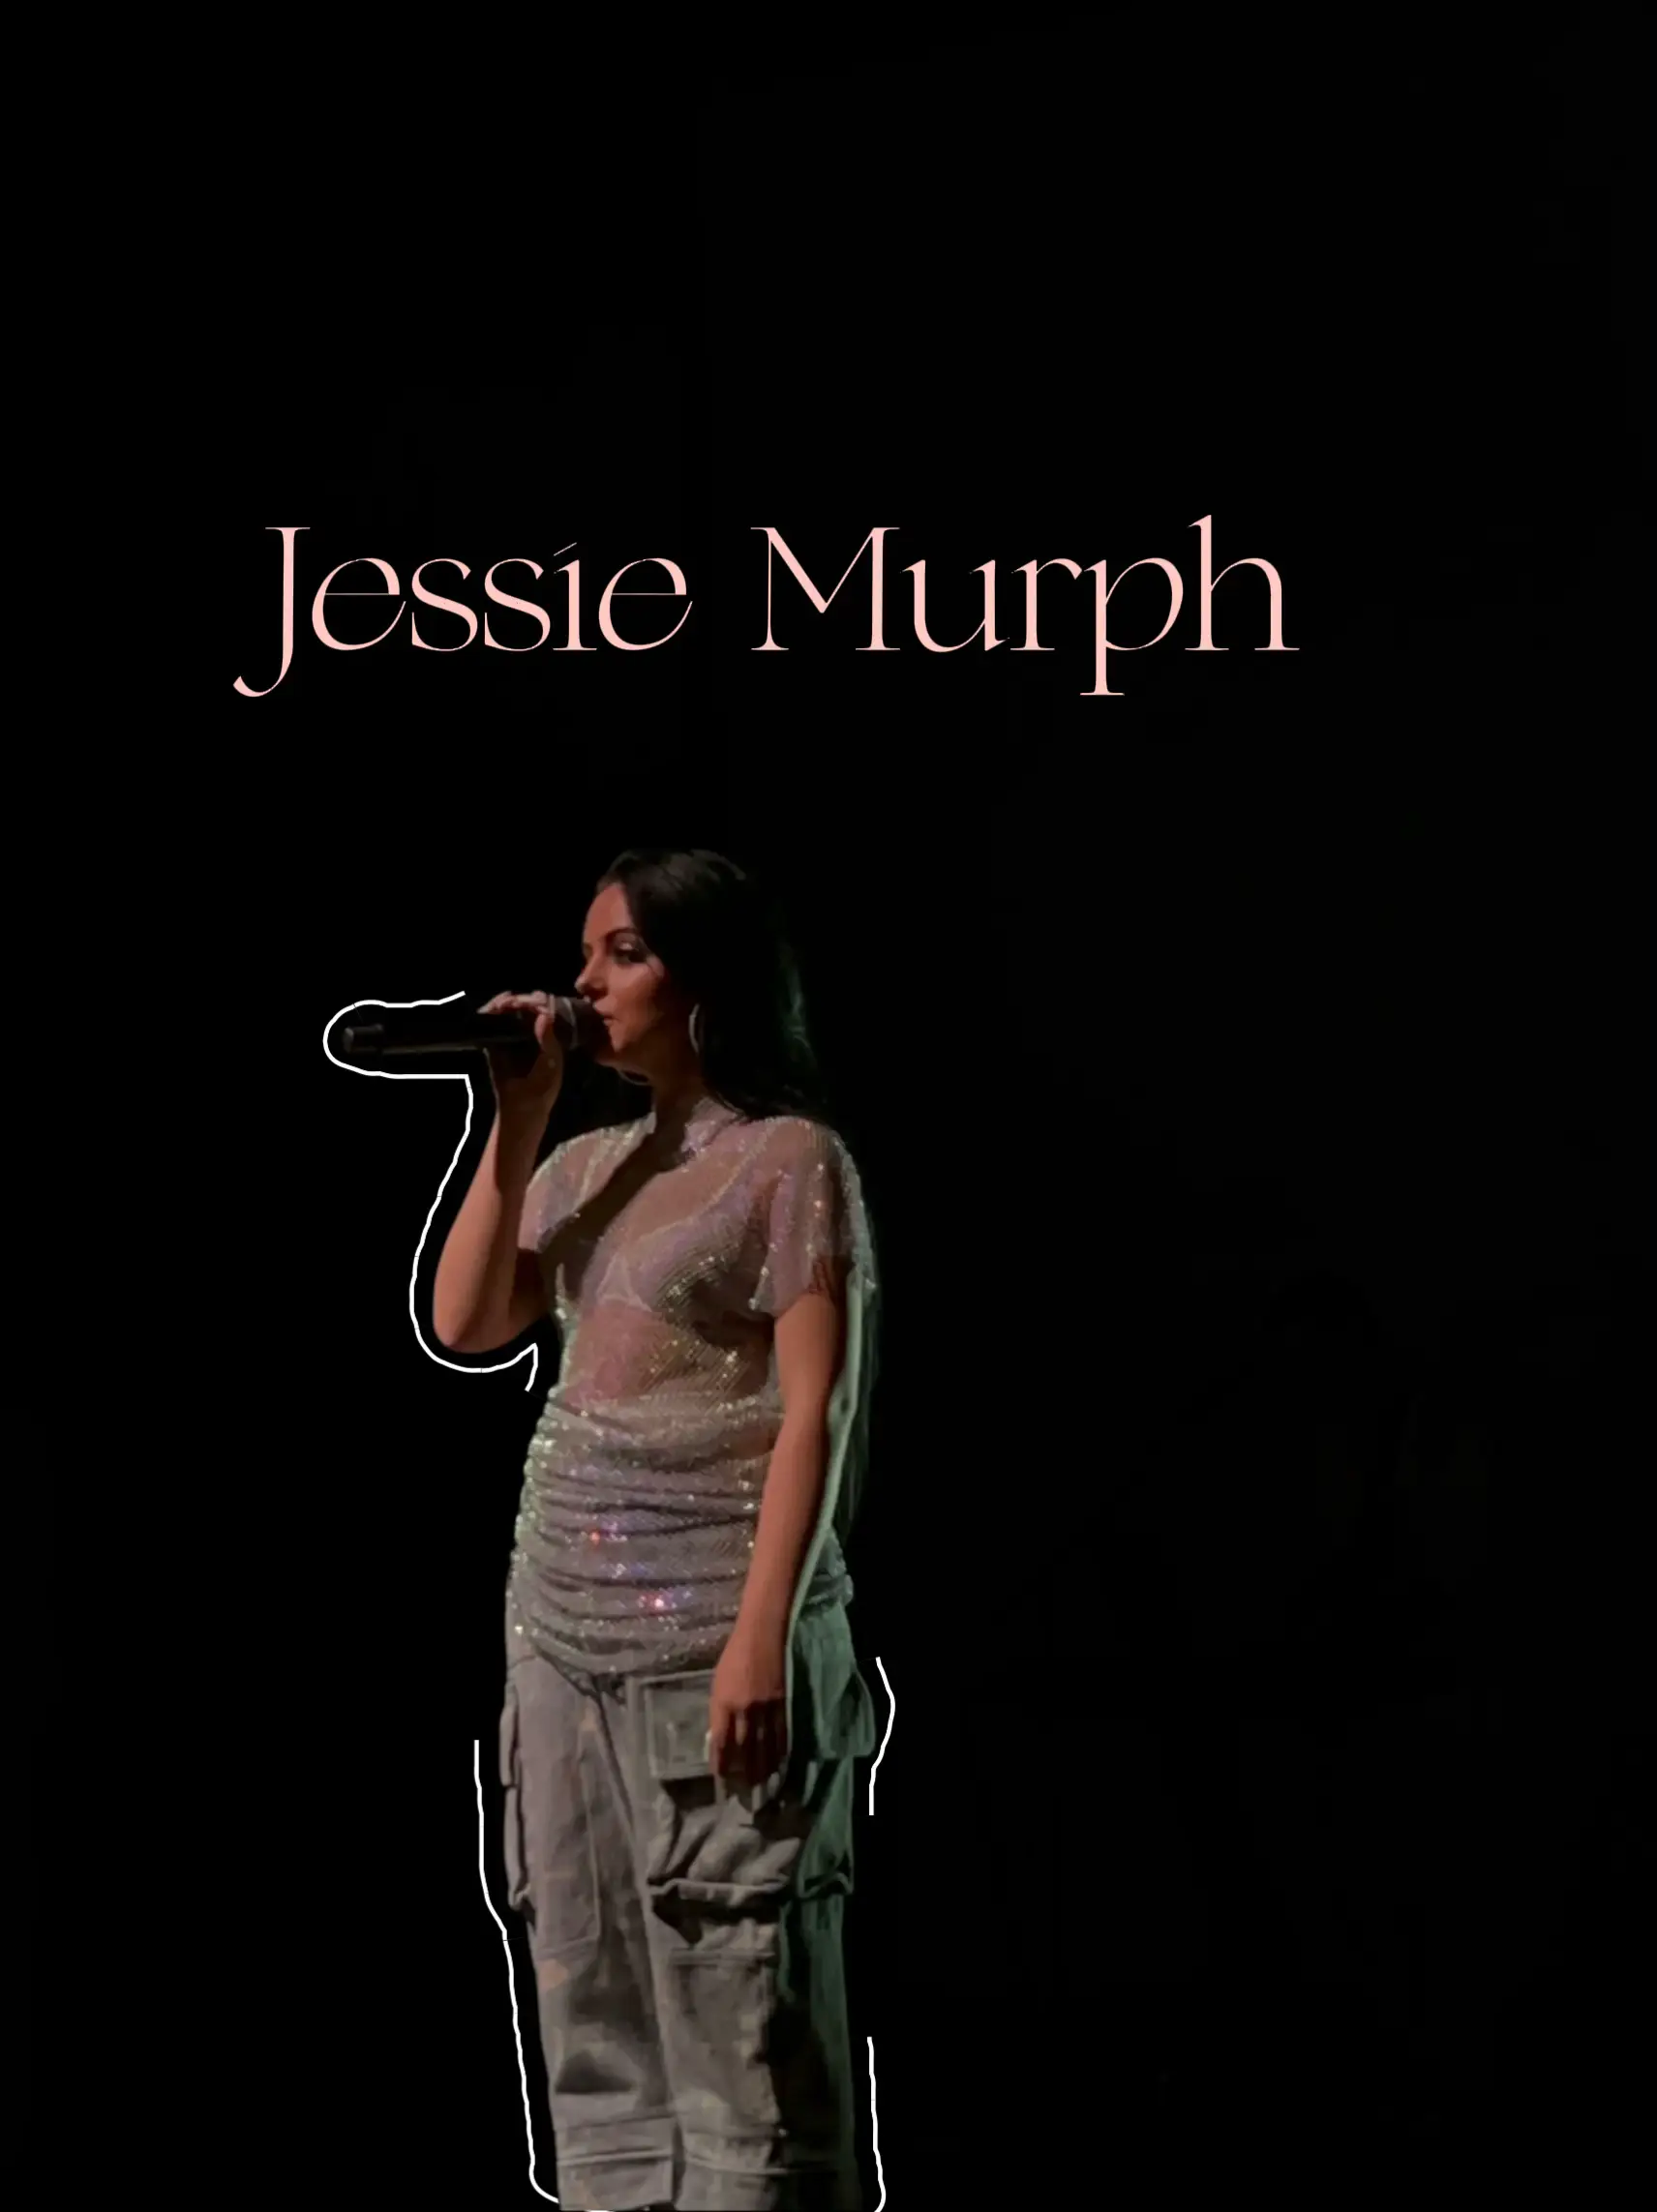 U Played - Jessie Murph/cover🎶 . 🎶: i don't got a heart but f it